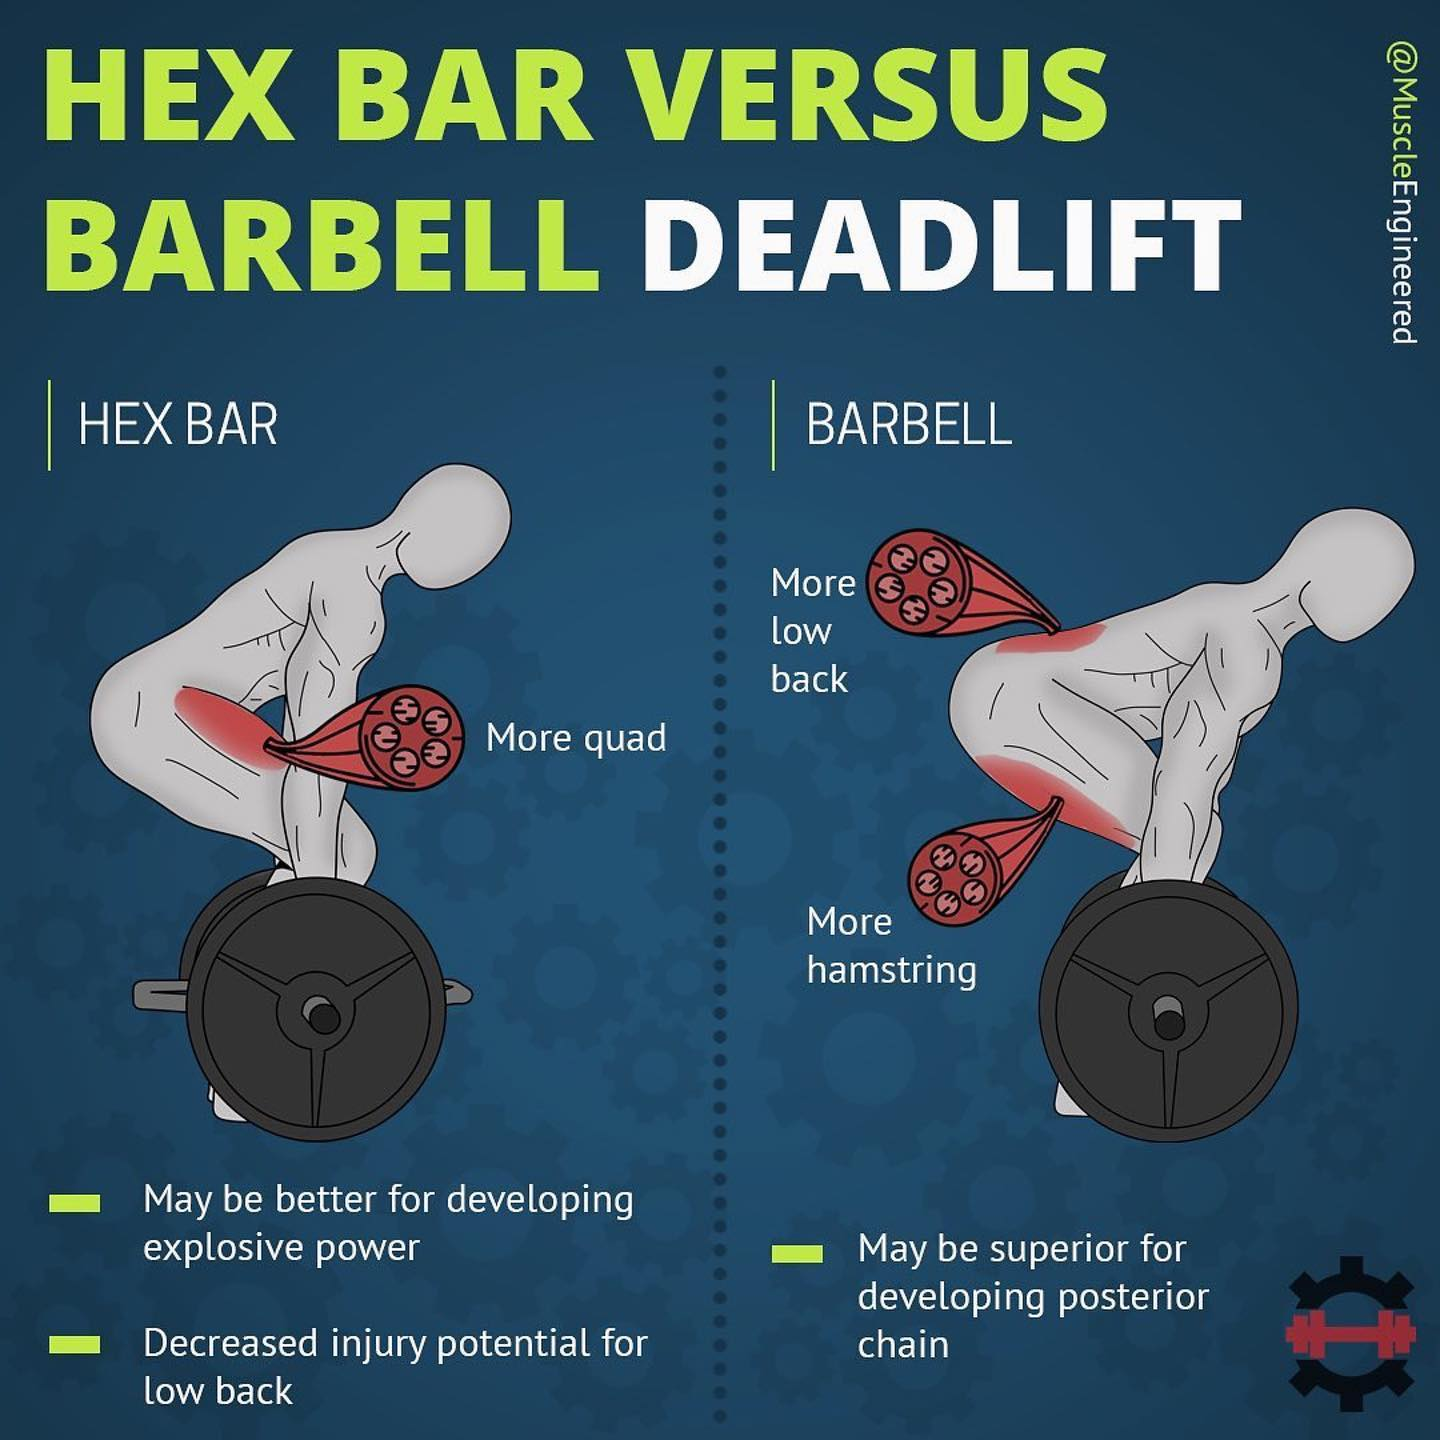 13 Benefits of the Trap Bar Deadlift vs. Barbell Deadlift